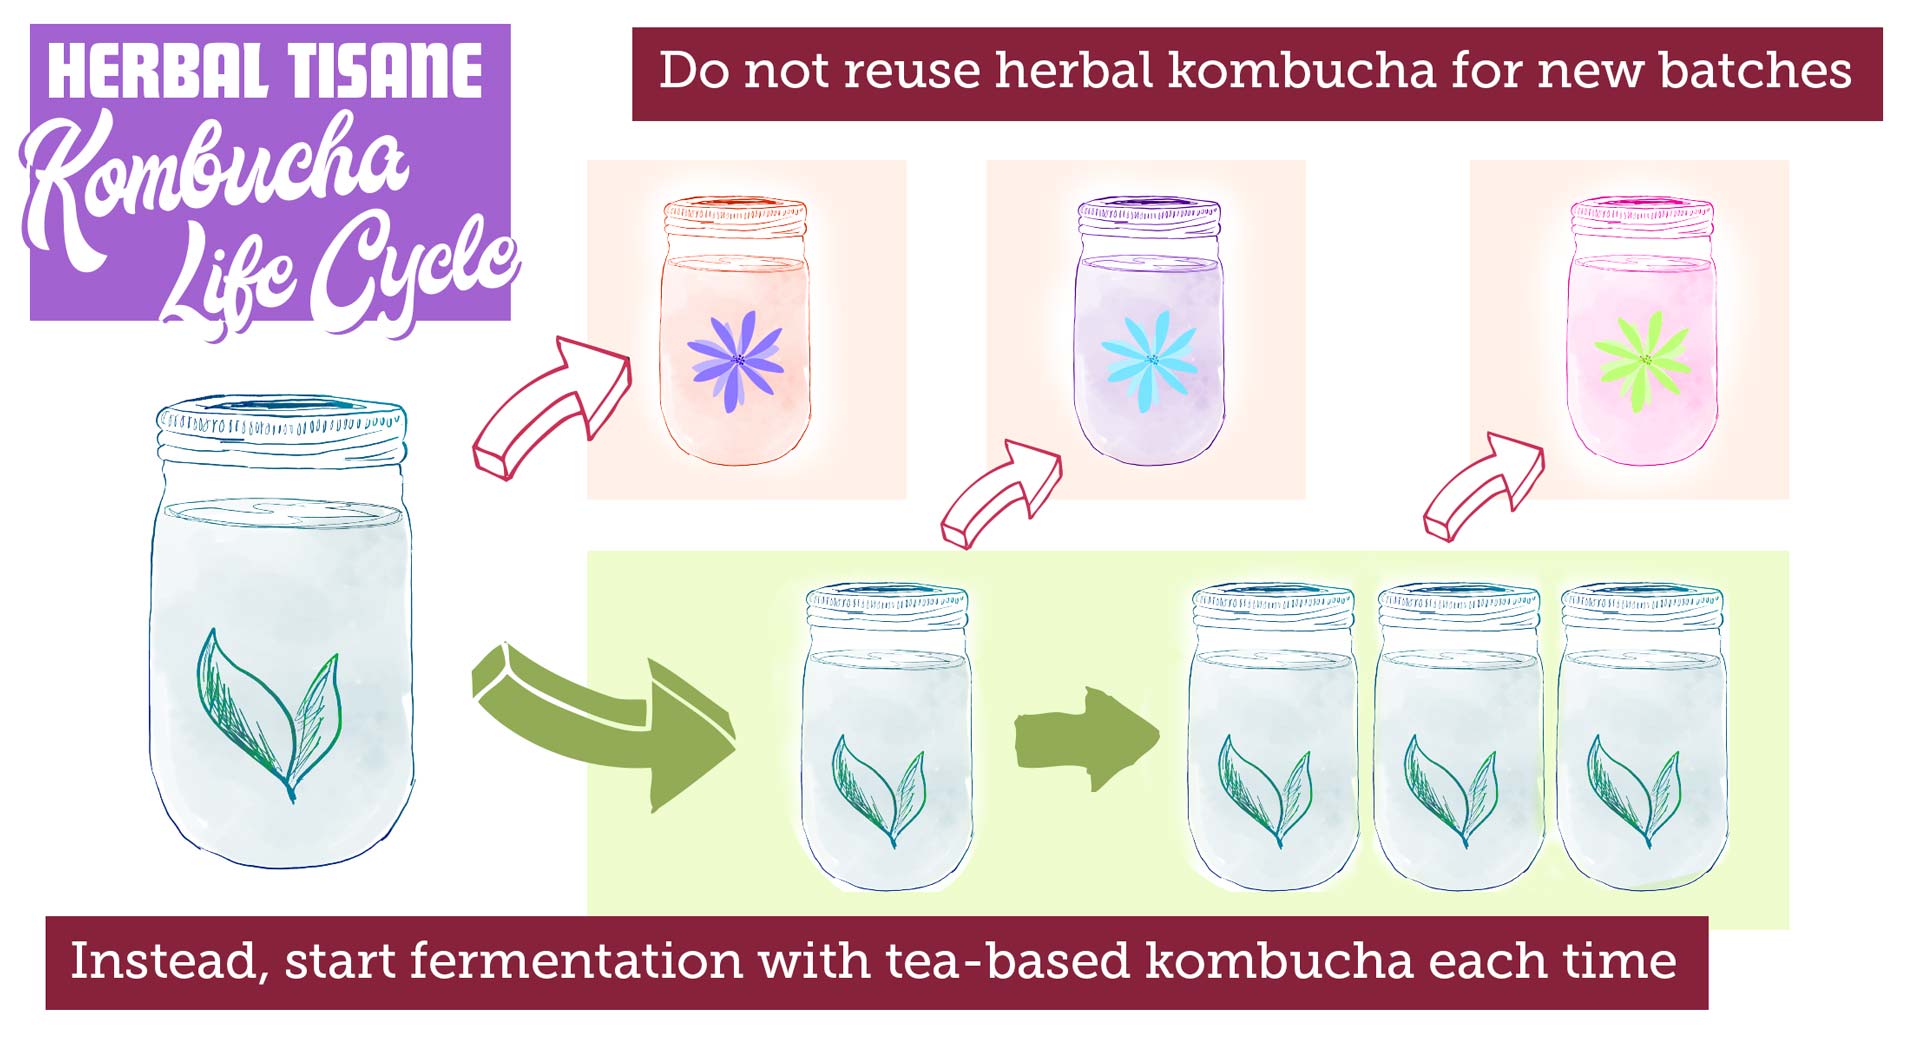 Do not use herbal kombucha for new batches. Instead, start fermentation with tea-based kombucha each time.